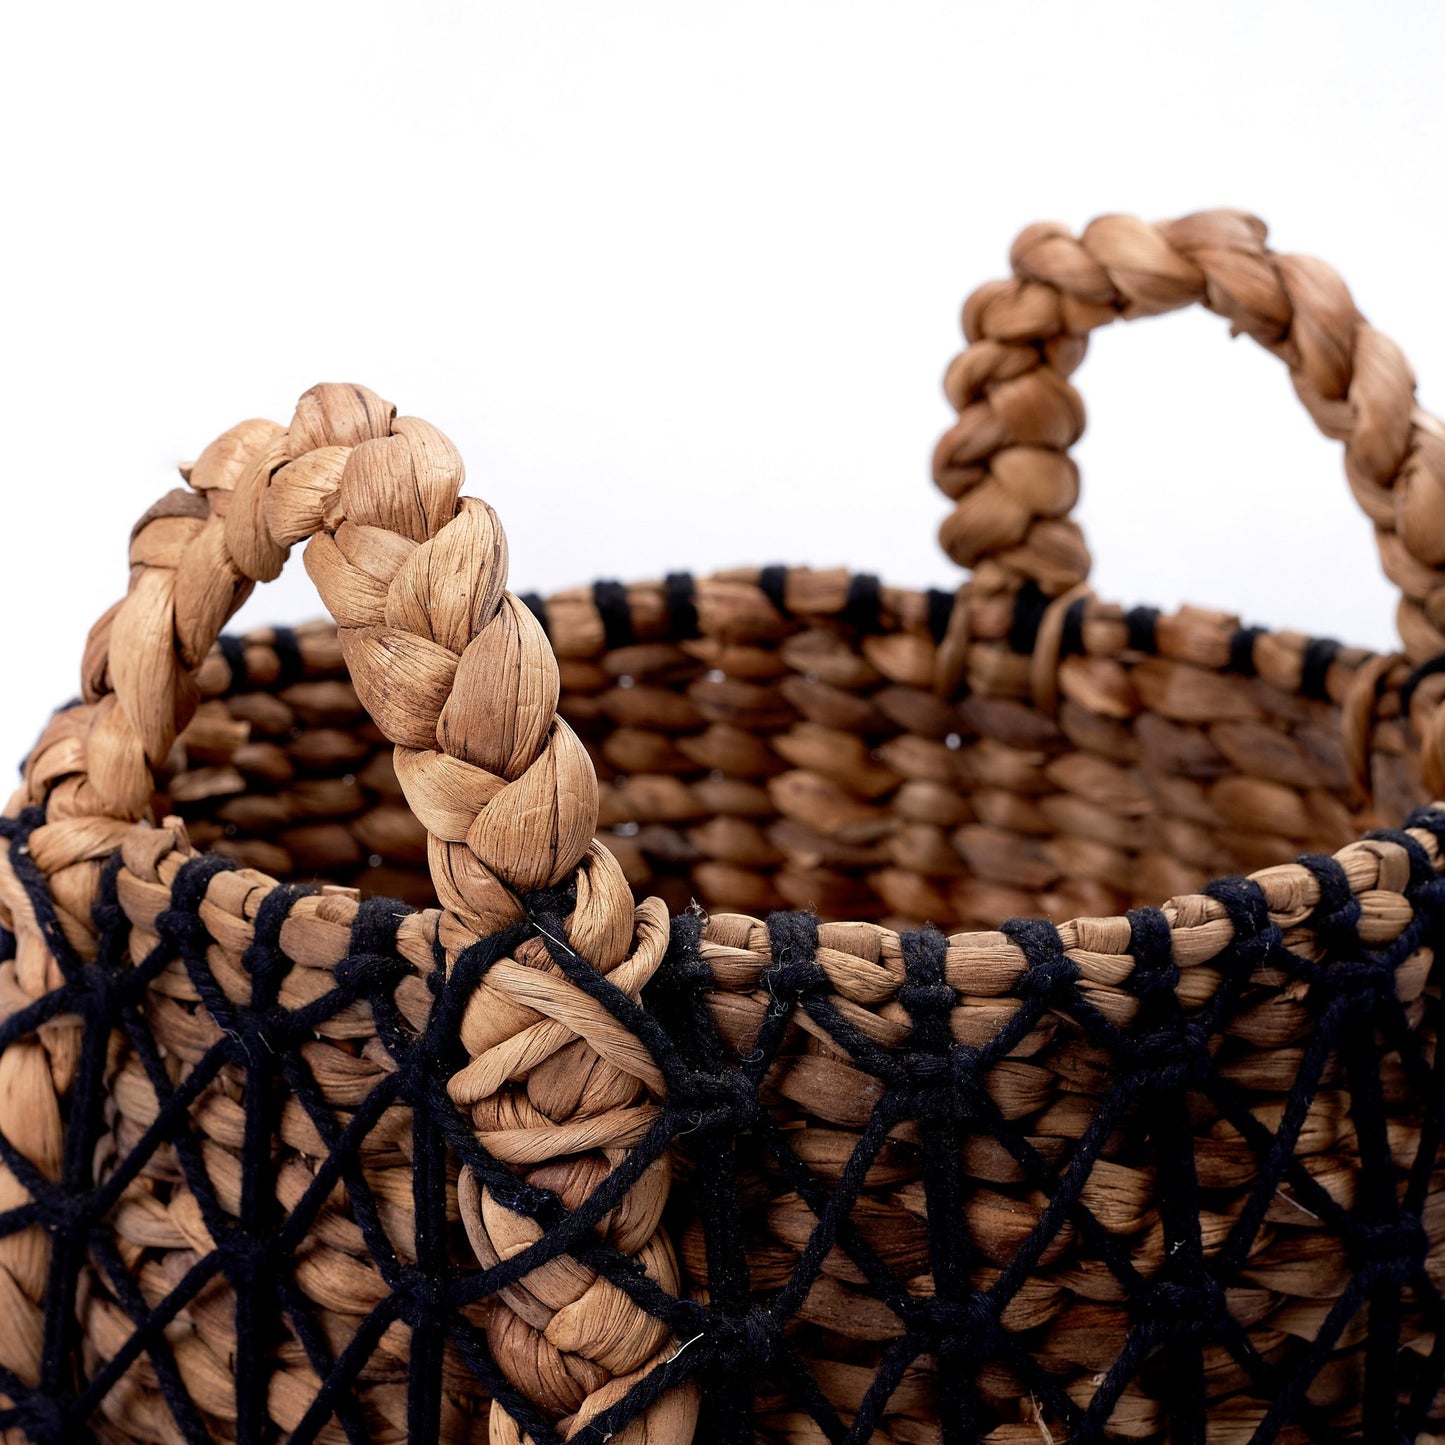 Laundry basket PRAYA | Plant basket made of water hyacinth